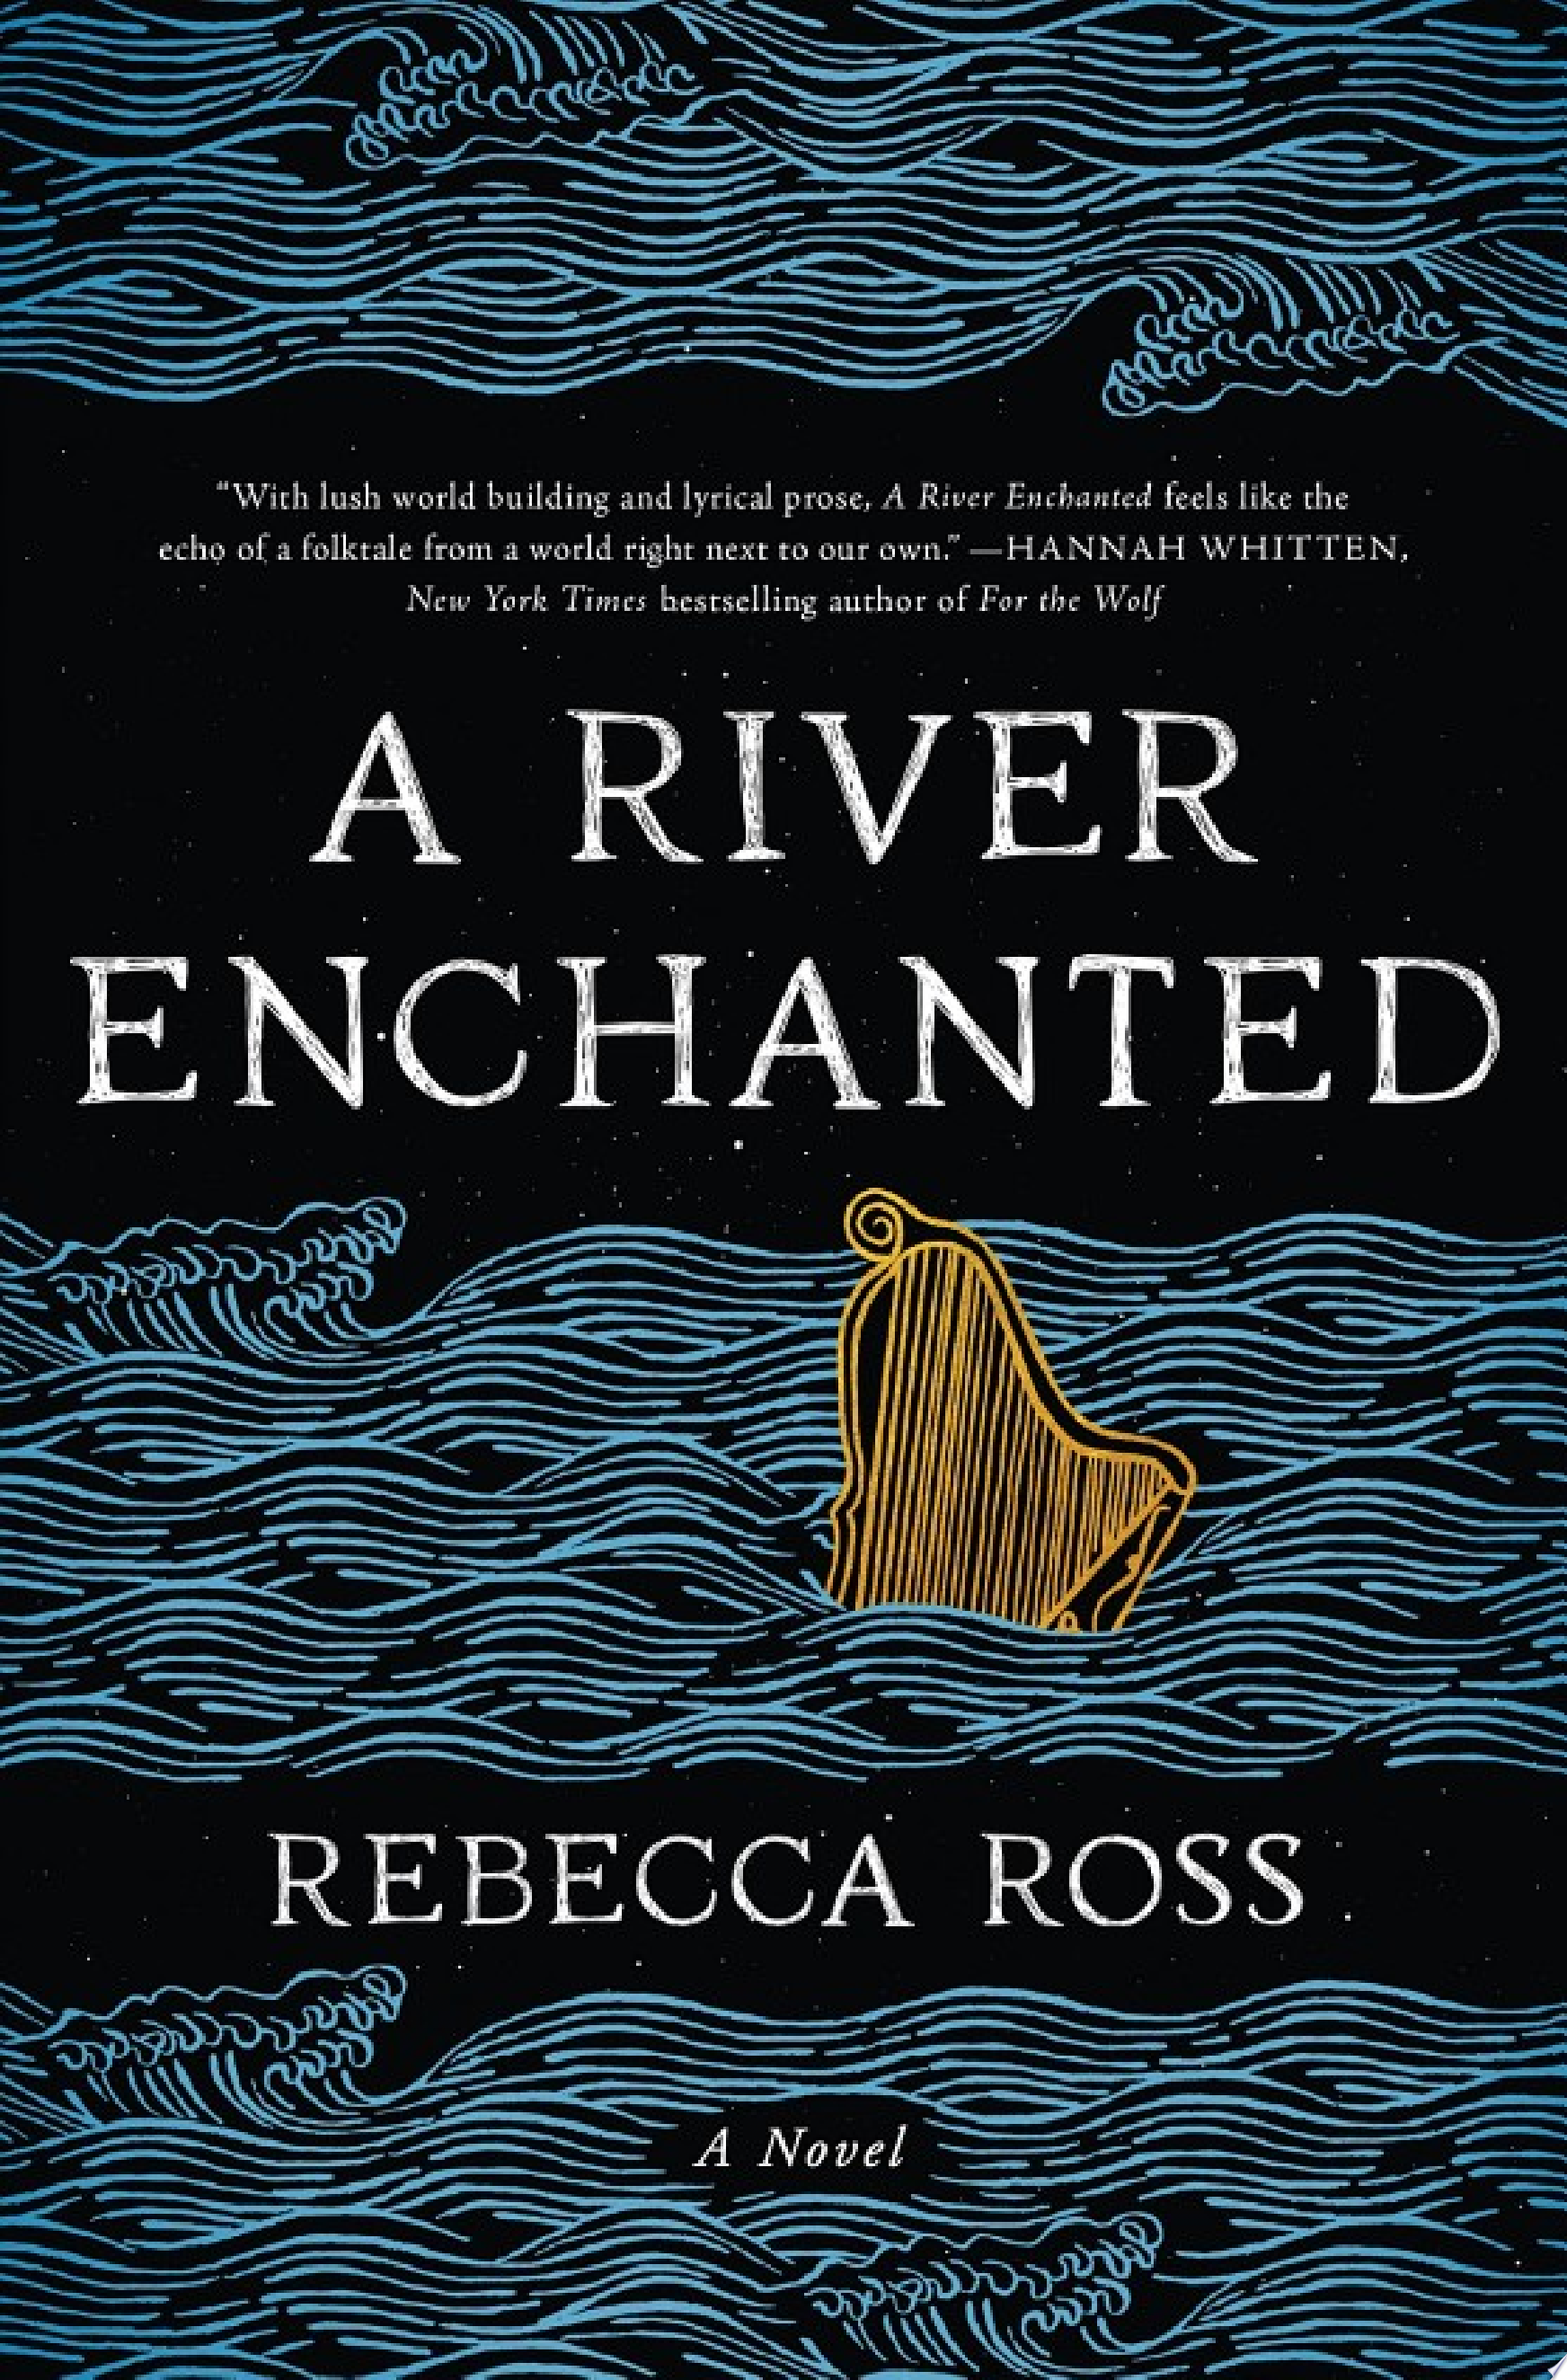 A Fragile Enchantment – Tessa Talks Books